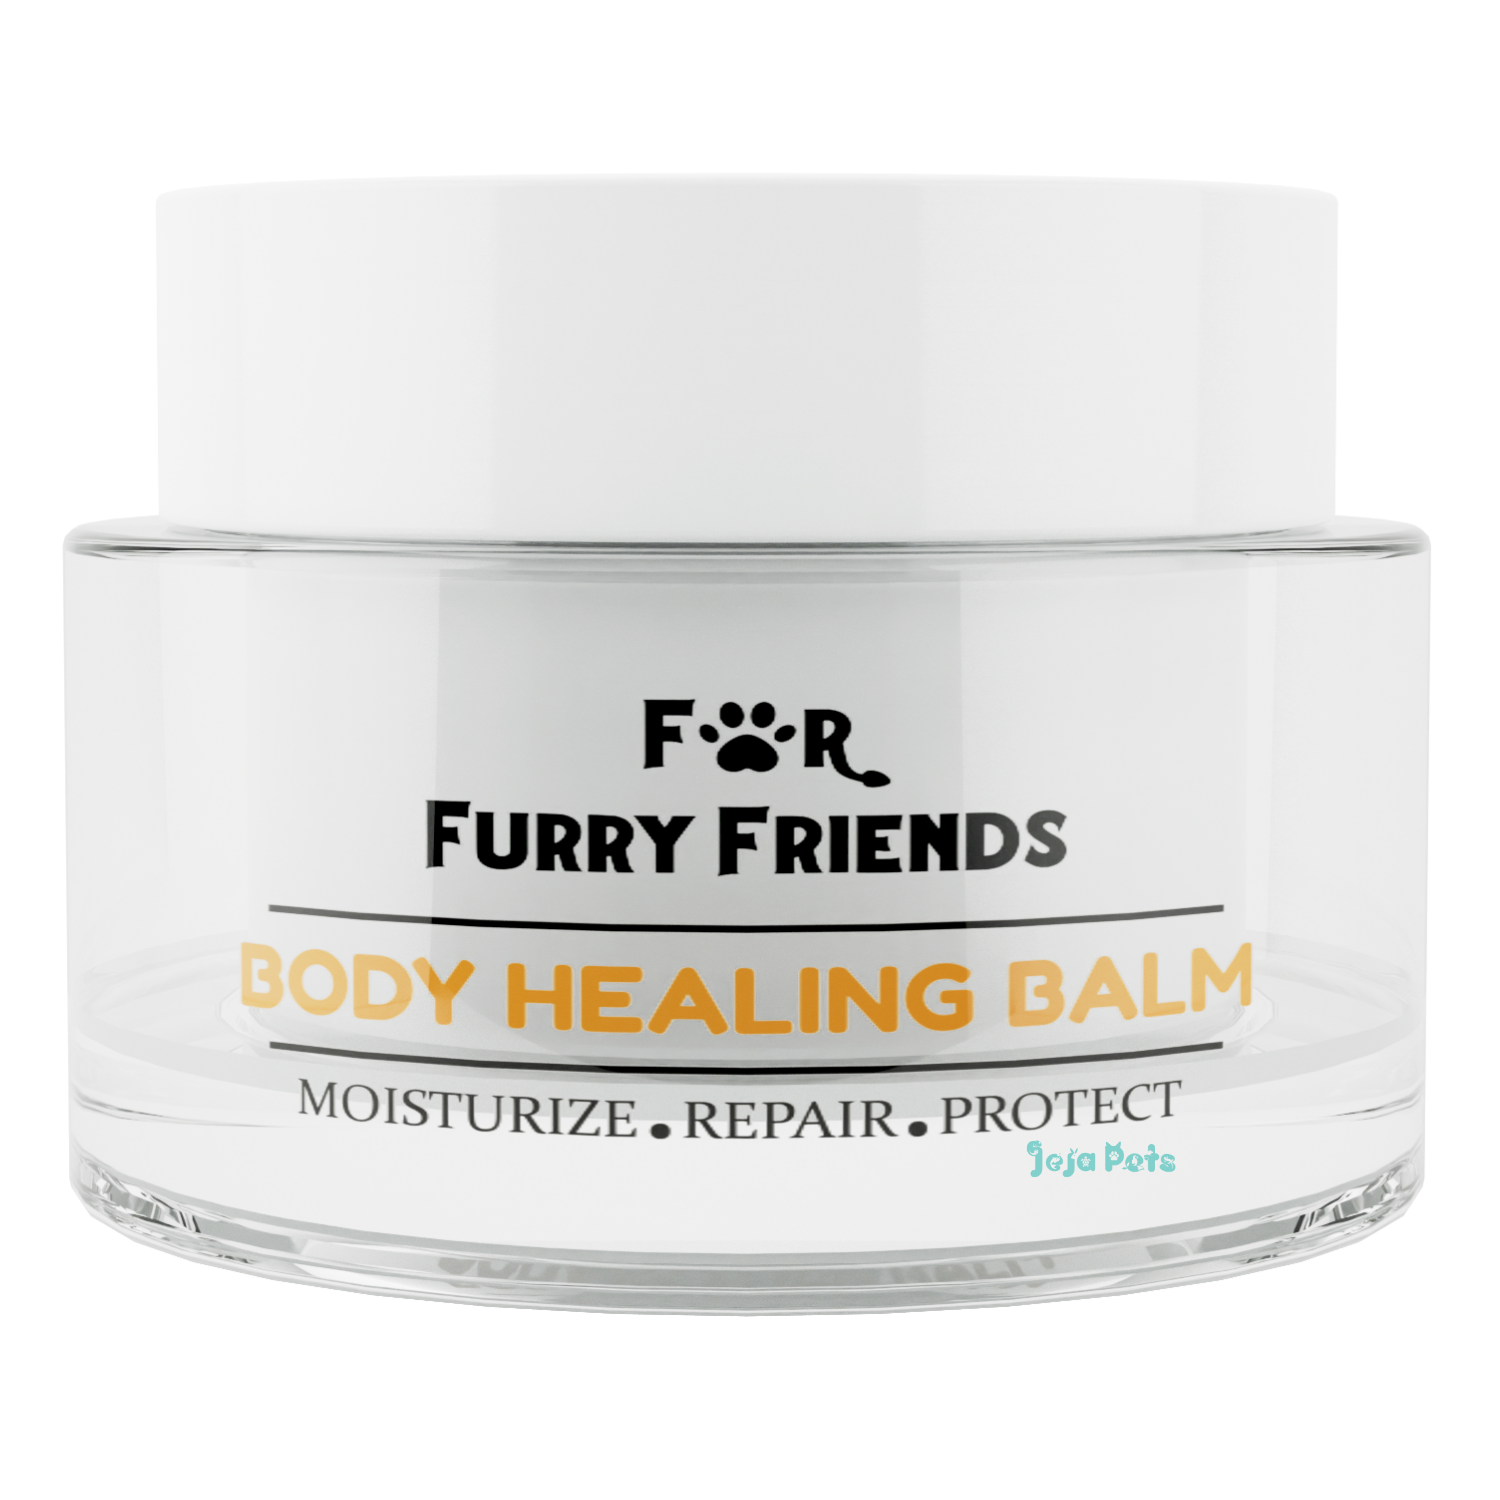 For Furry Friends Dog Healing Balm - 30g